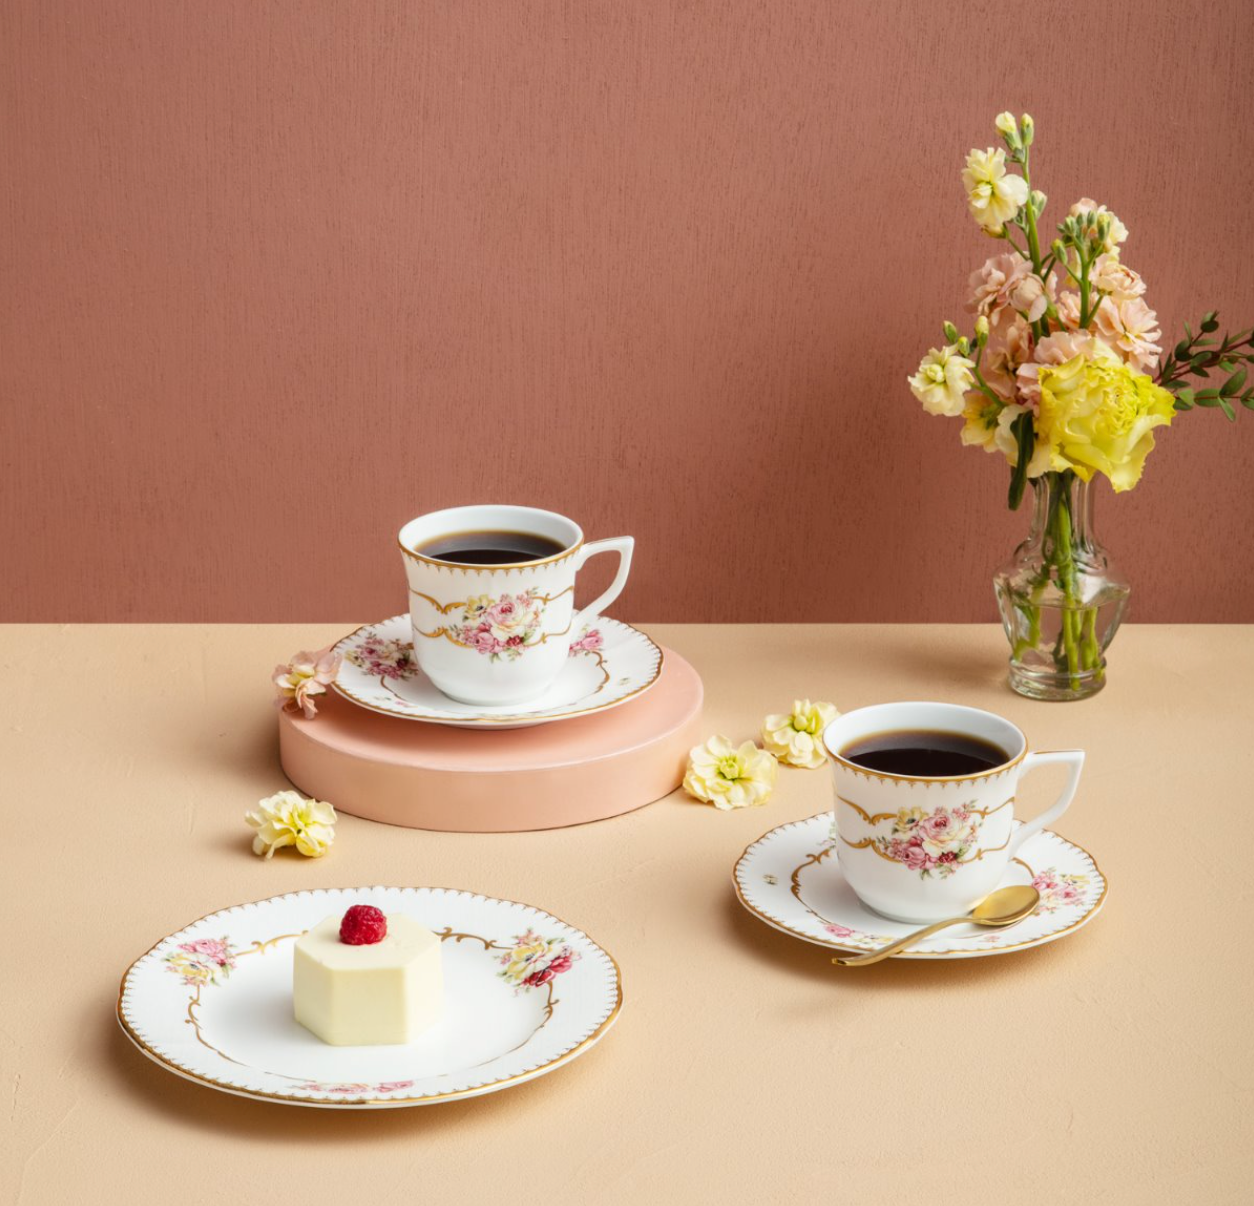 [Flamor Rose Clara] 4-Piece Coffee set, Serving for 2